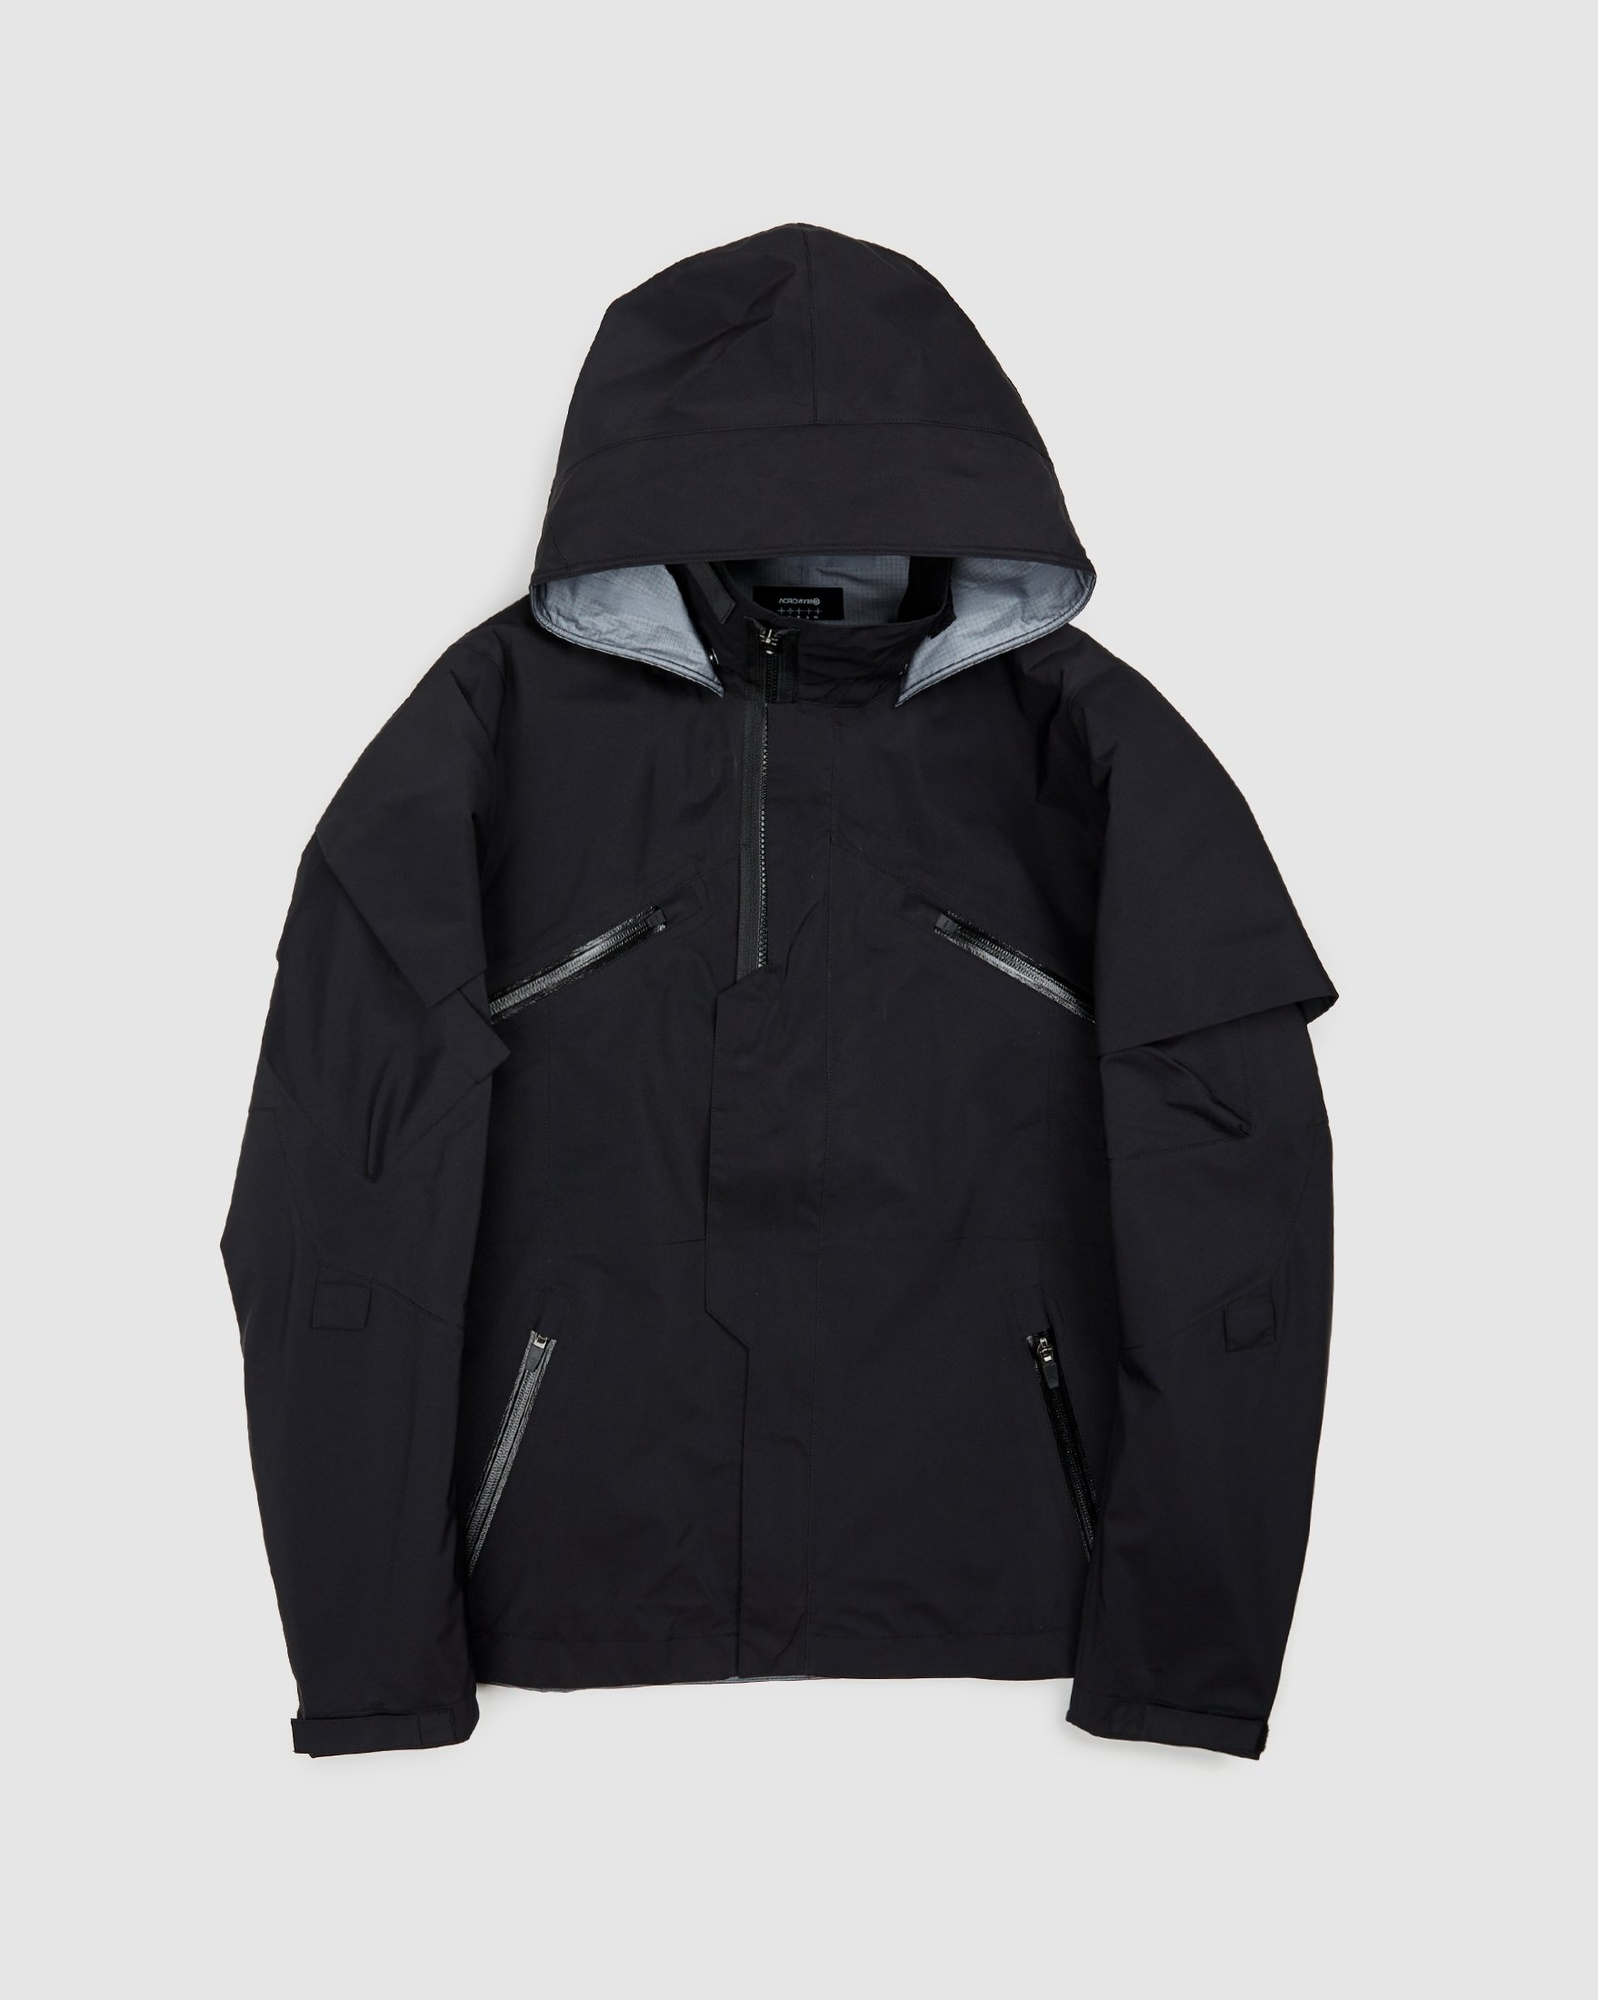 ACRONYM – J1B GT Jacket Black | Highsnobiety Shop